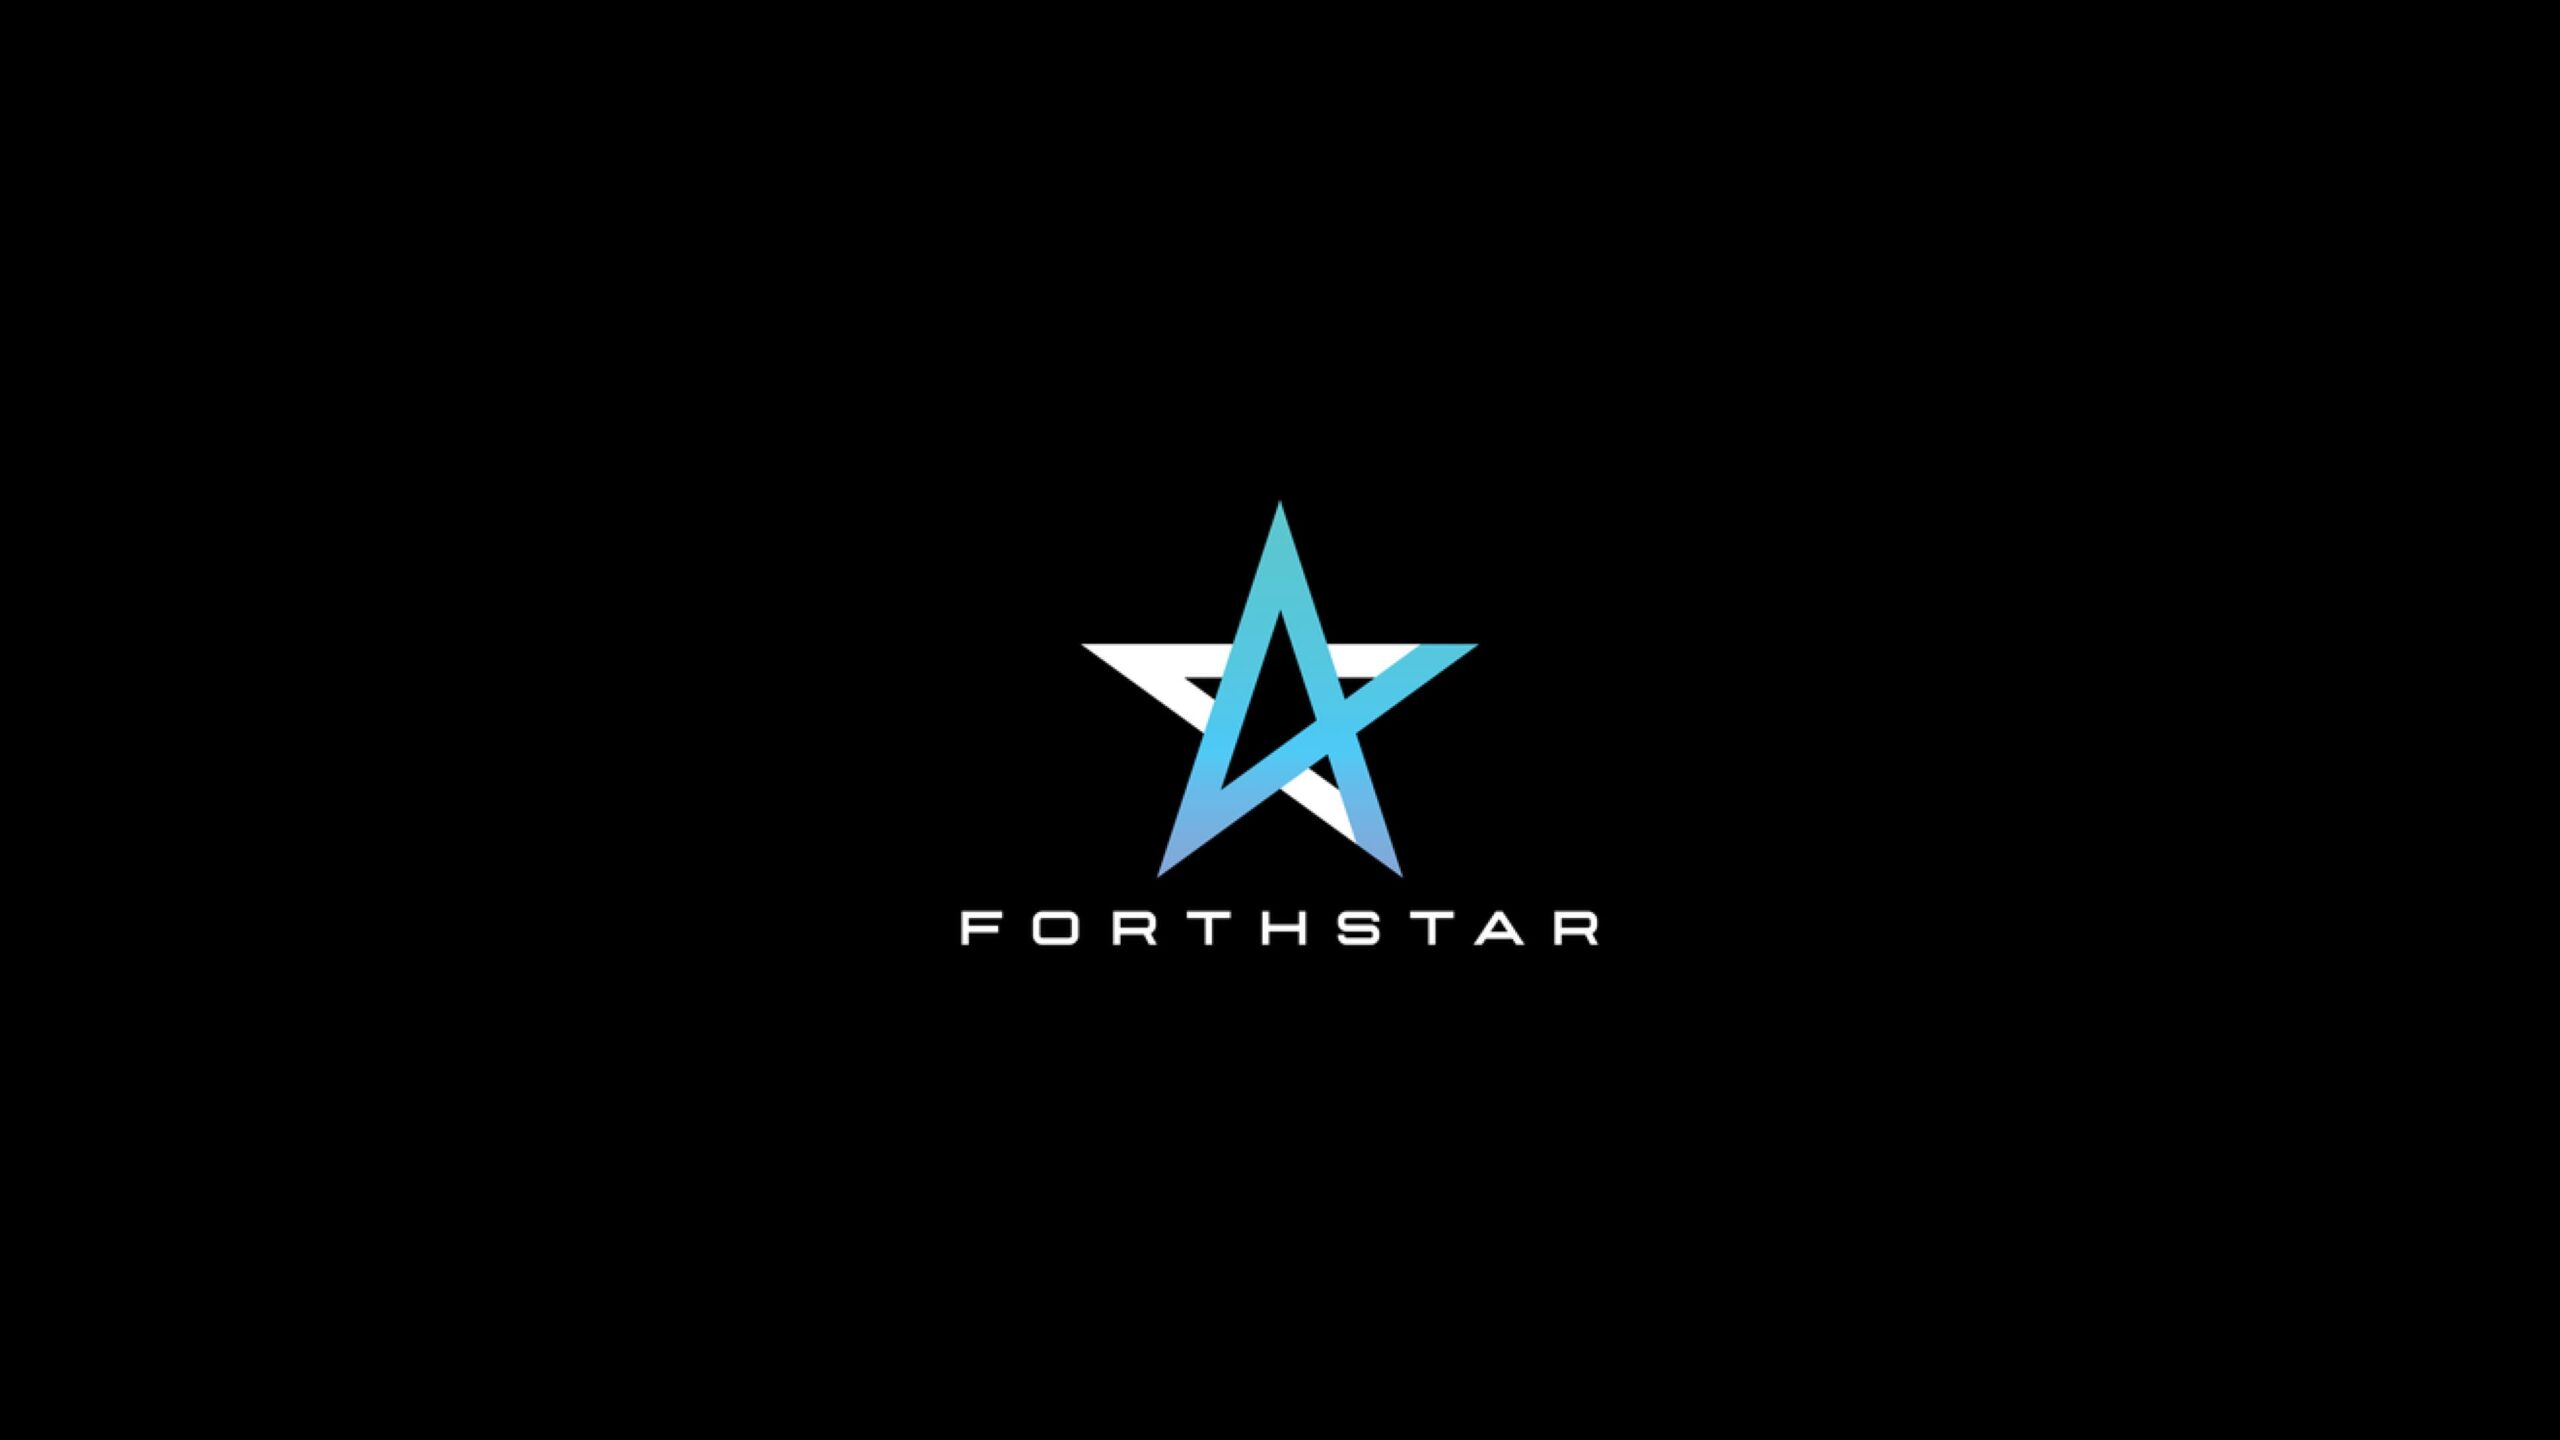 Playdemicの共同設立者、ForthStarゲームスタジオに1,000万ドルを調達